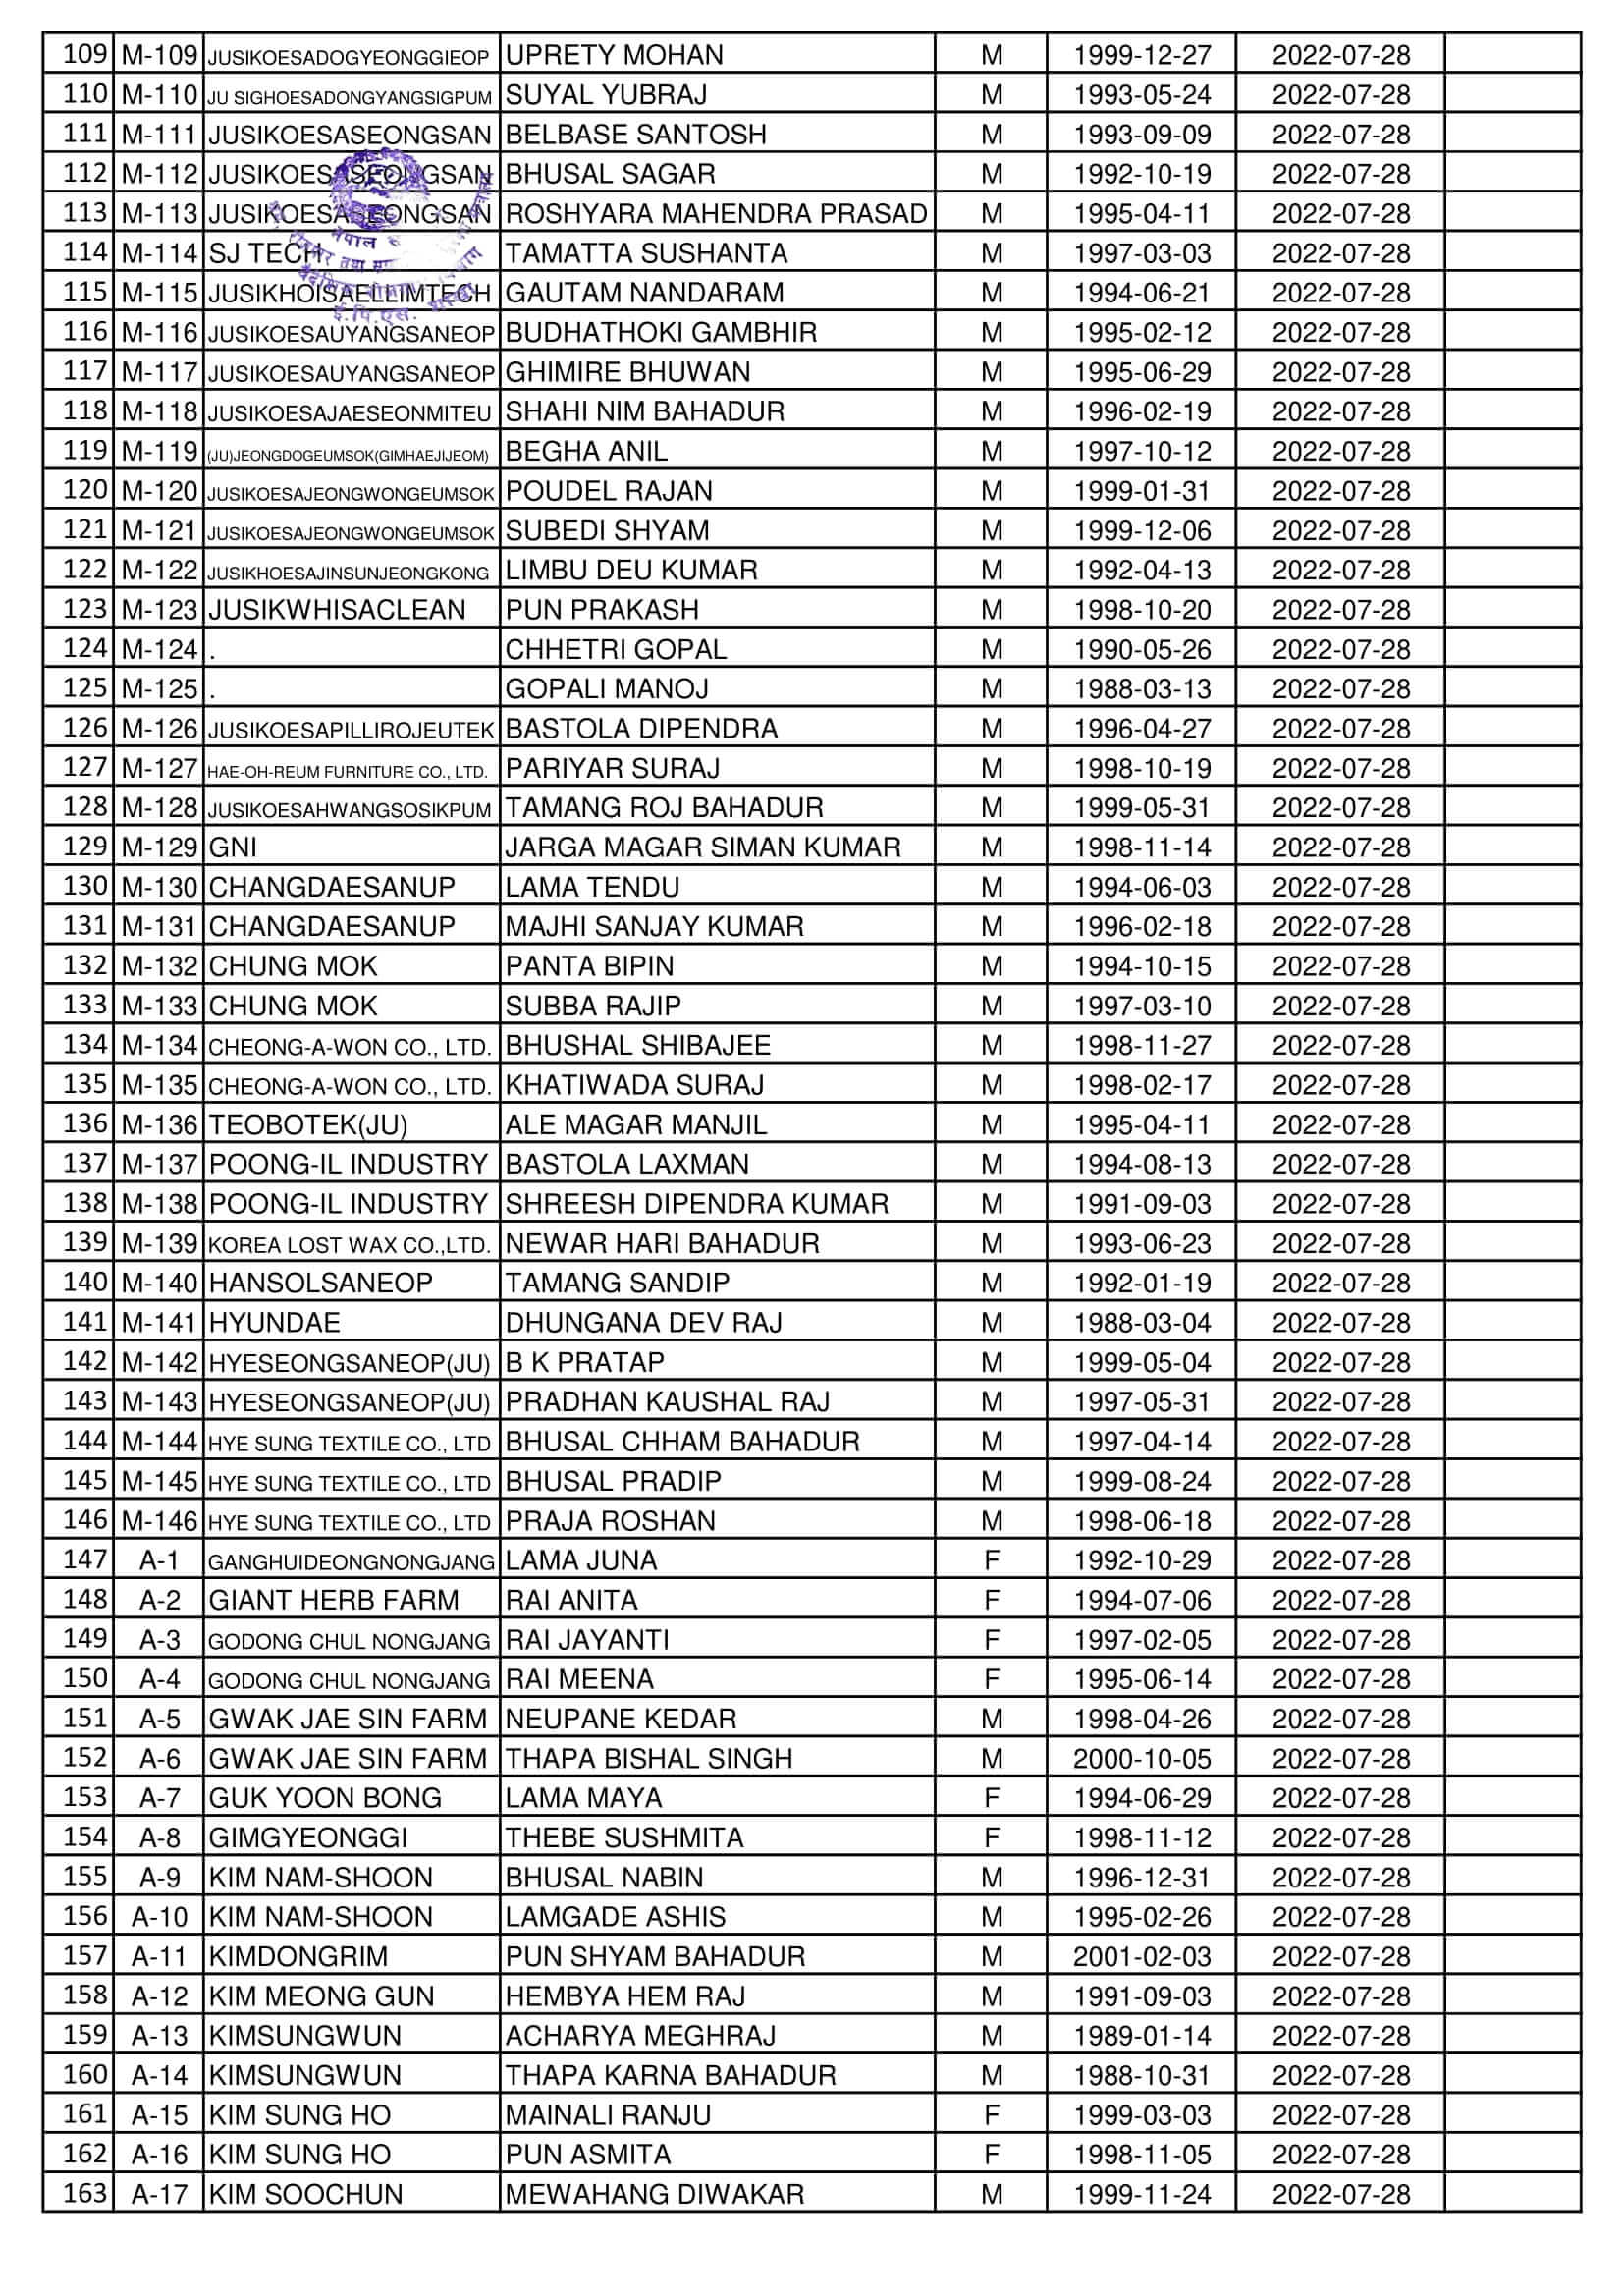 Final Name Lists of RW on 28 July 2022